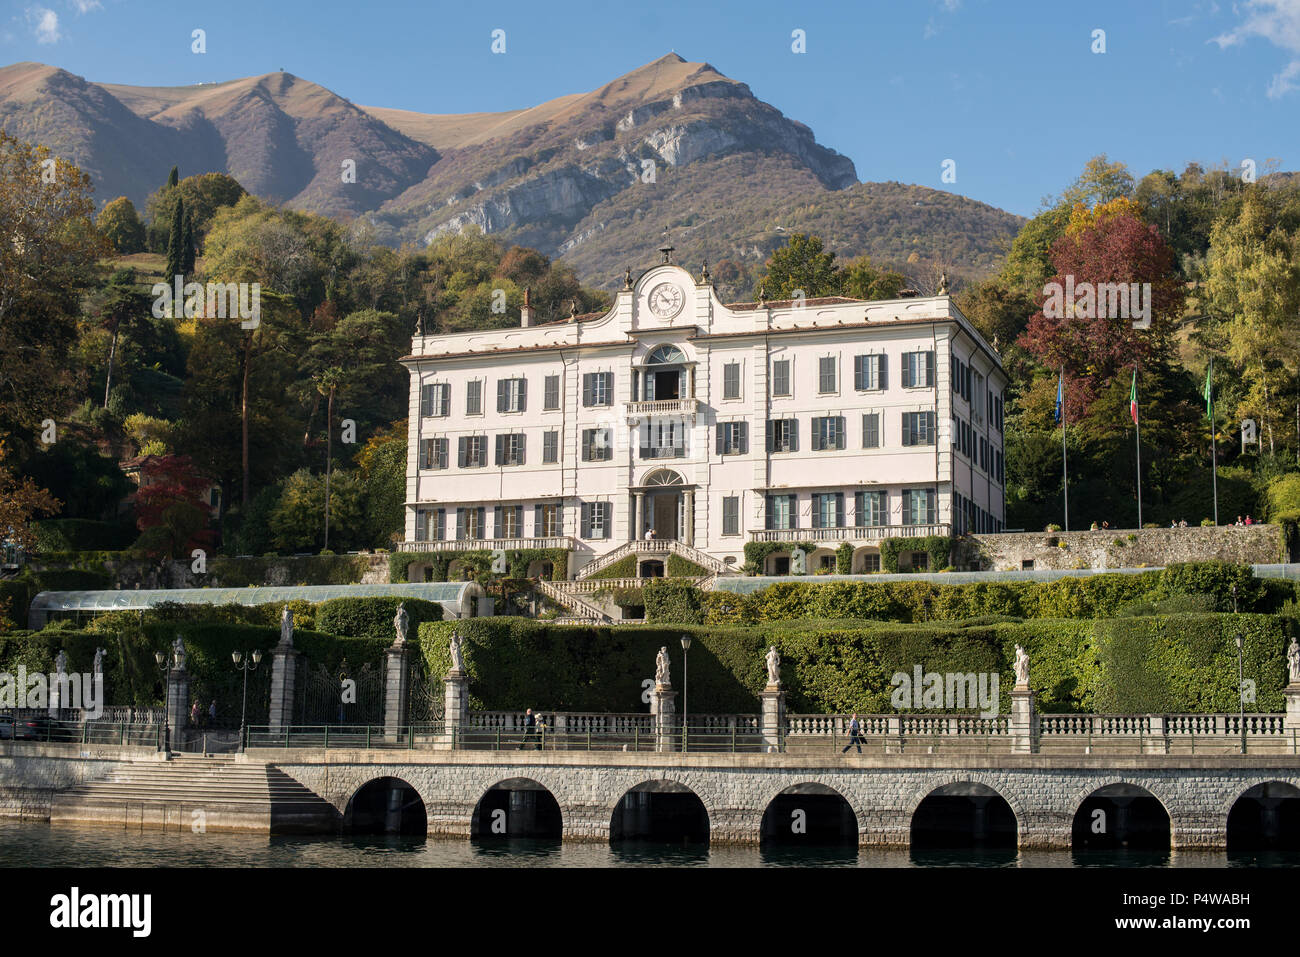 Villa Carlotta, Lake Como, Italy - October 27, 2017: Villa Carlotta on Shoreline of Lake Como, Italy. Stock Photo